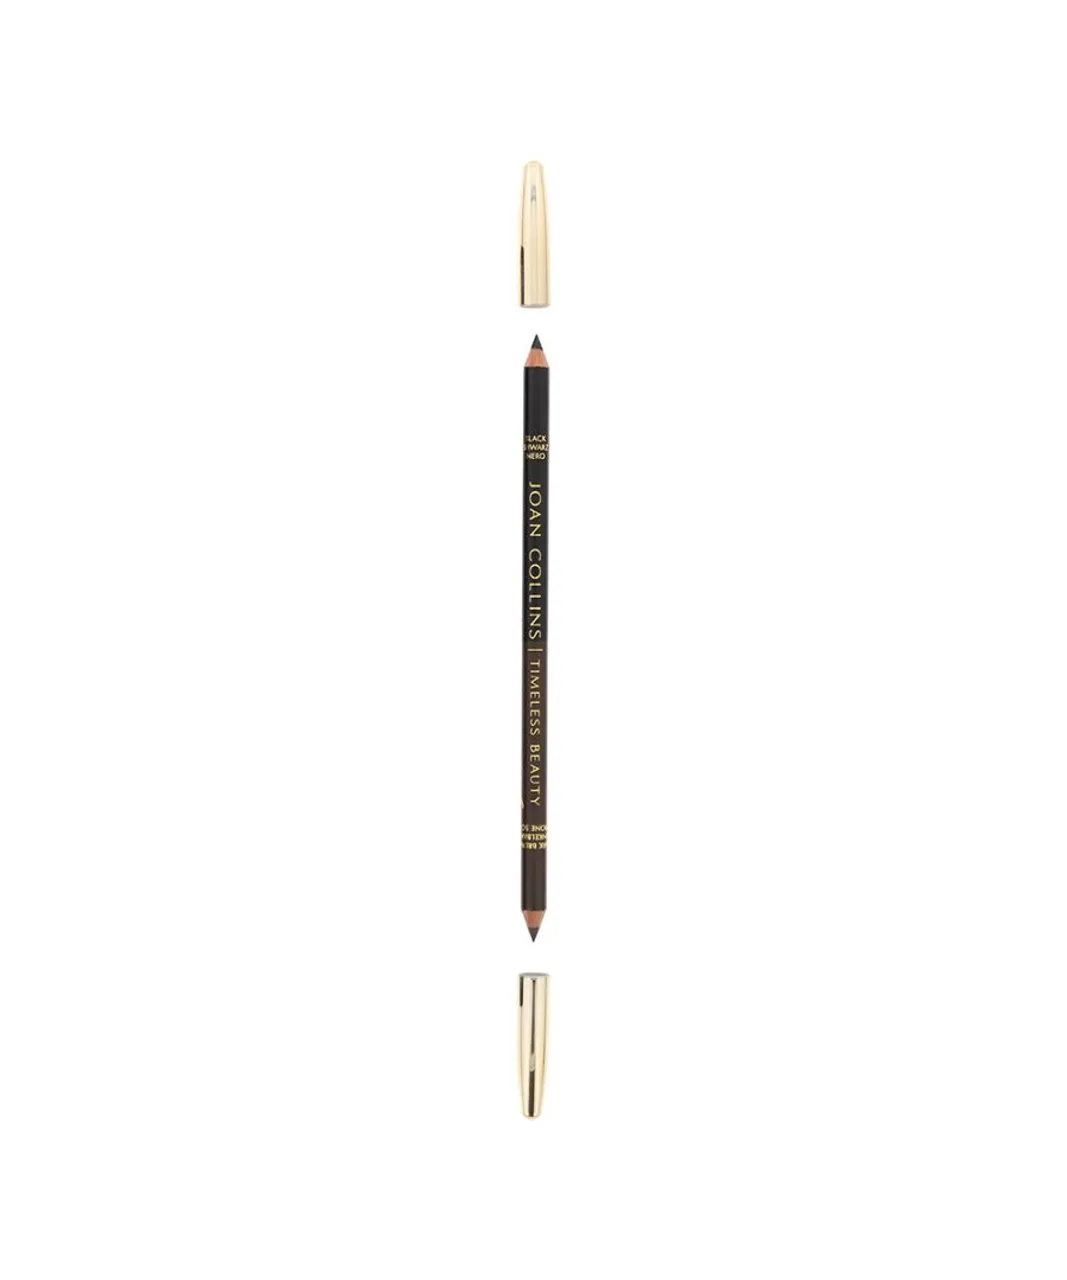 Joan Collins Womens Eyebrow Pencil Duo Black/Dark Brown 1.56g - One Size